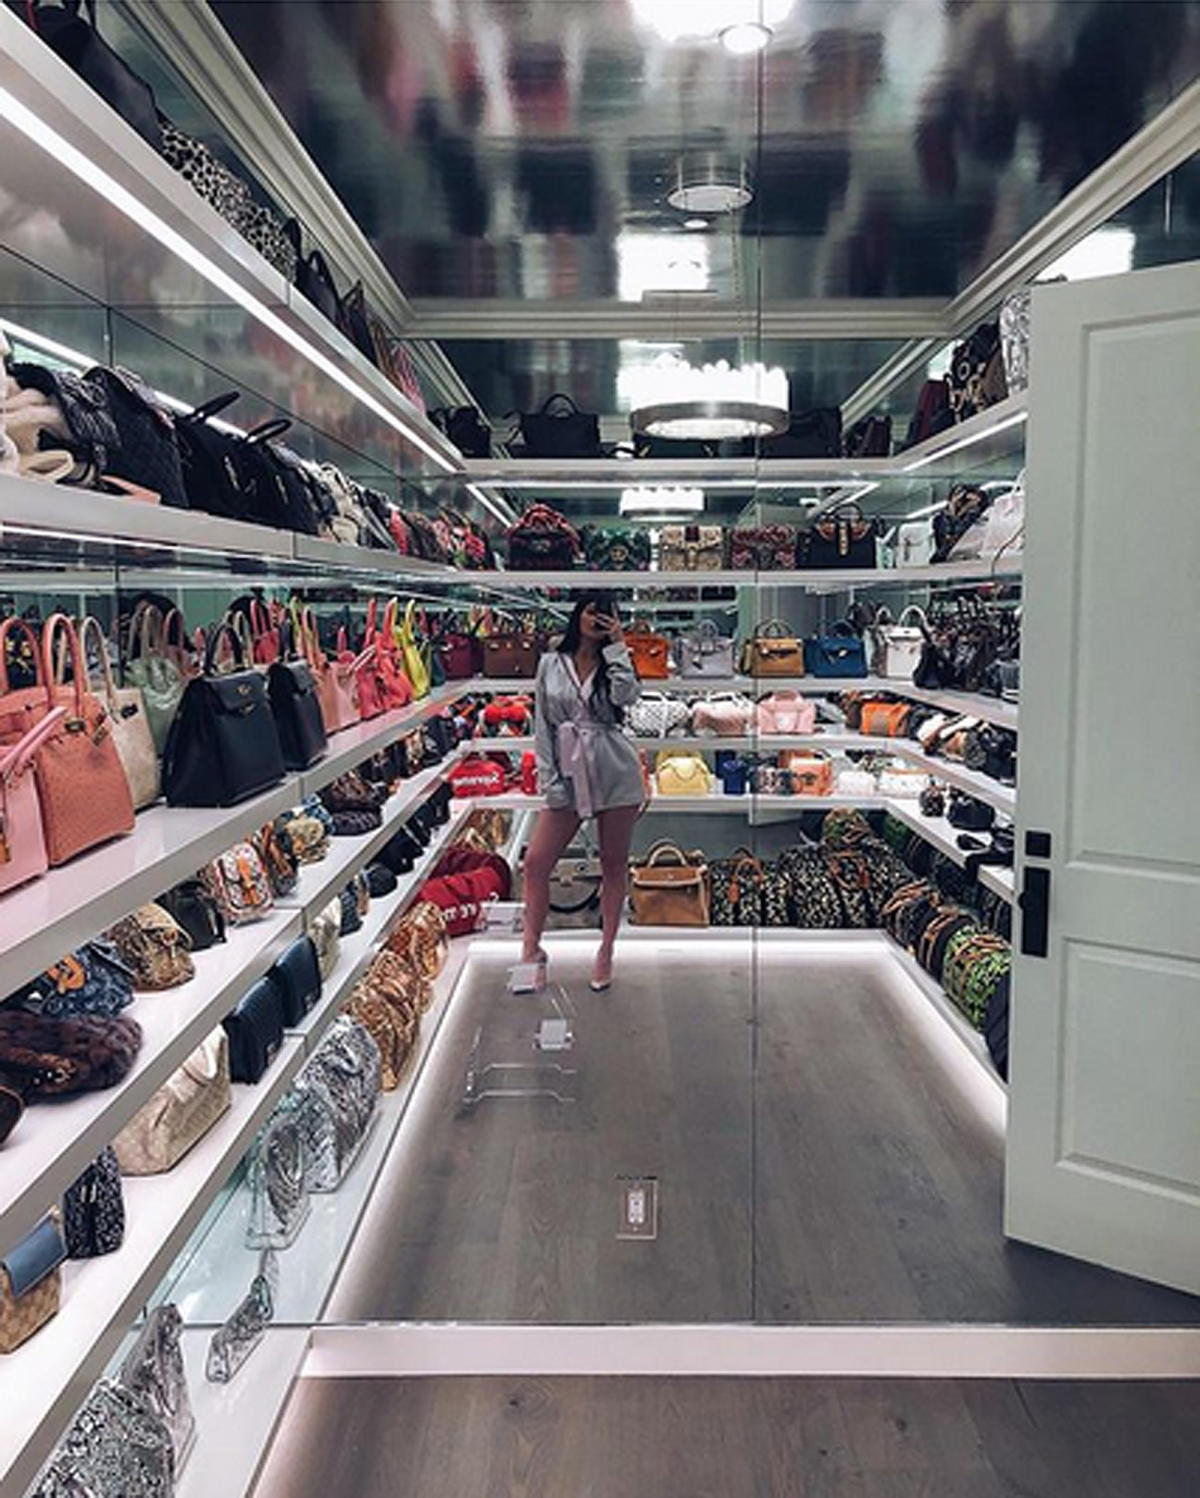 Kris Jenner Birkin Bag Closet: Video